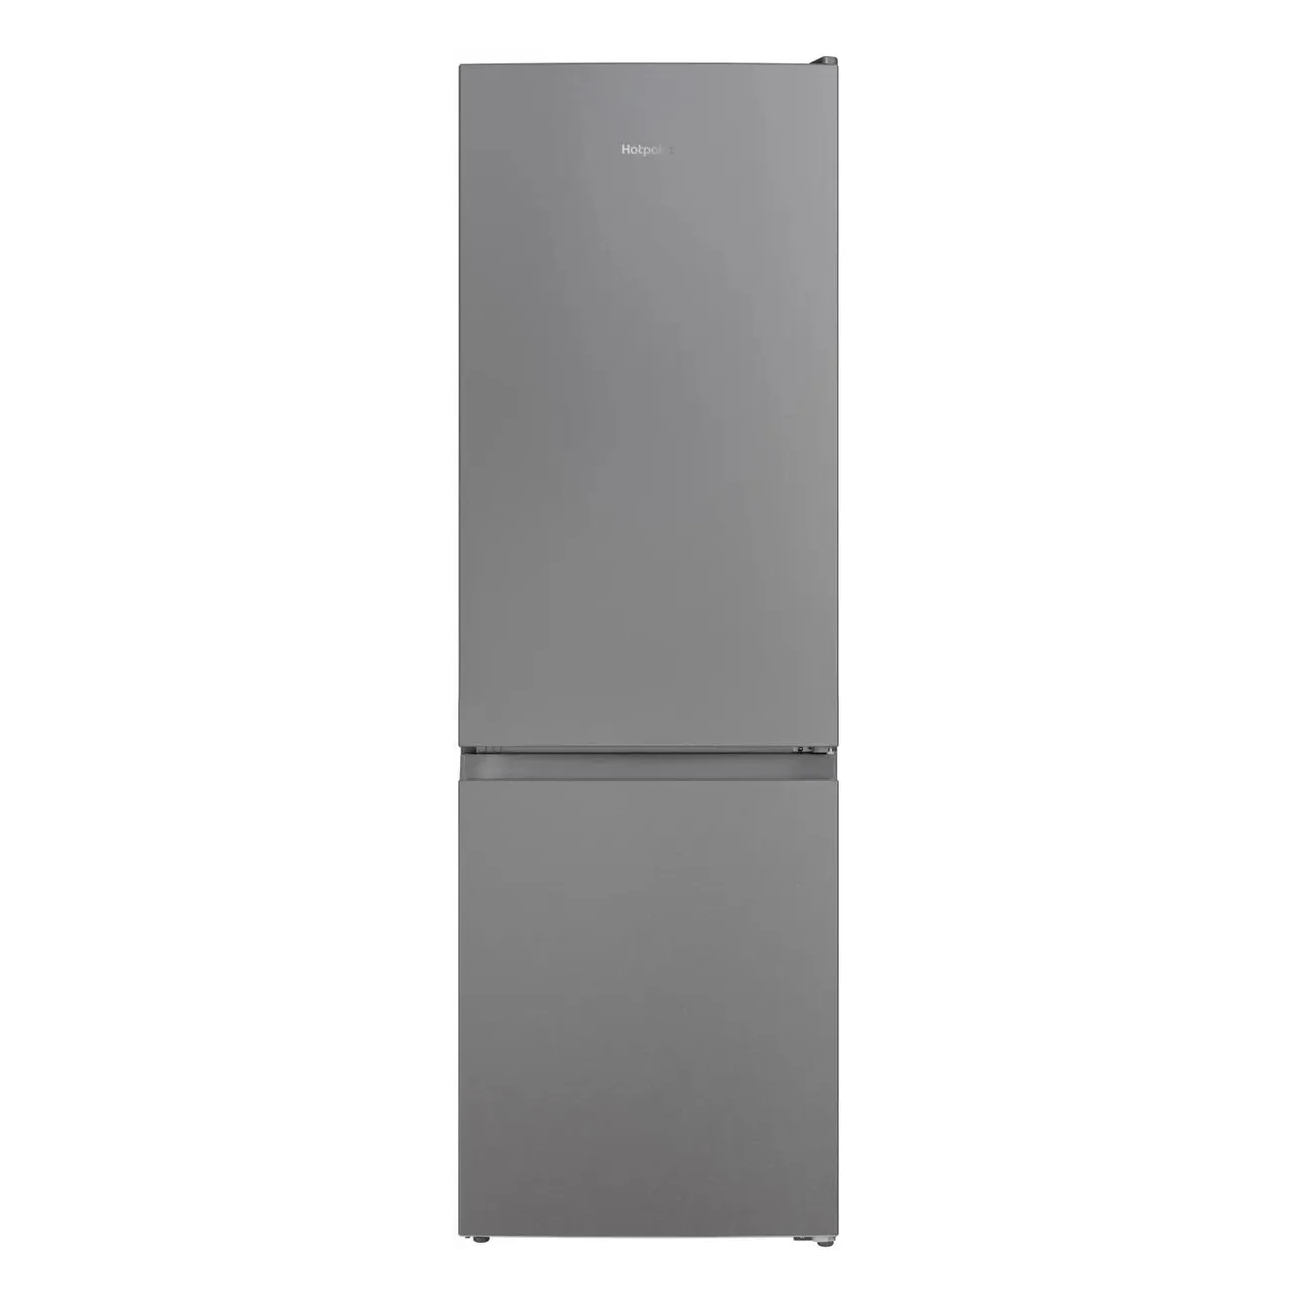 Холодильник HotPoint HT 4180 S серебристый холодильник hotpoint ht 4180 s серебристый